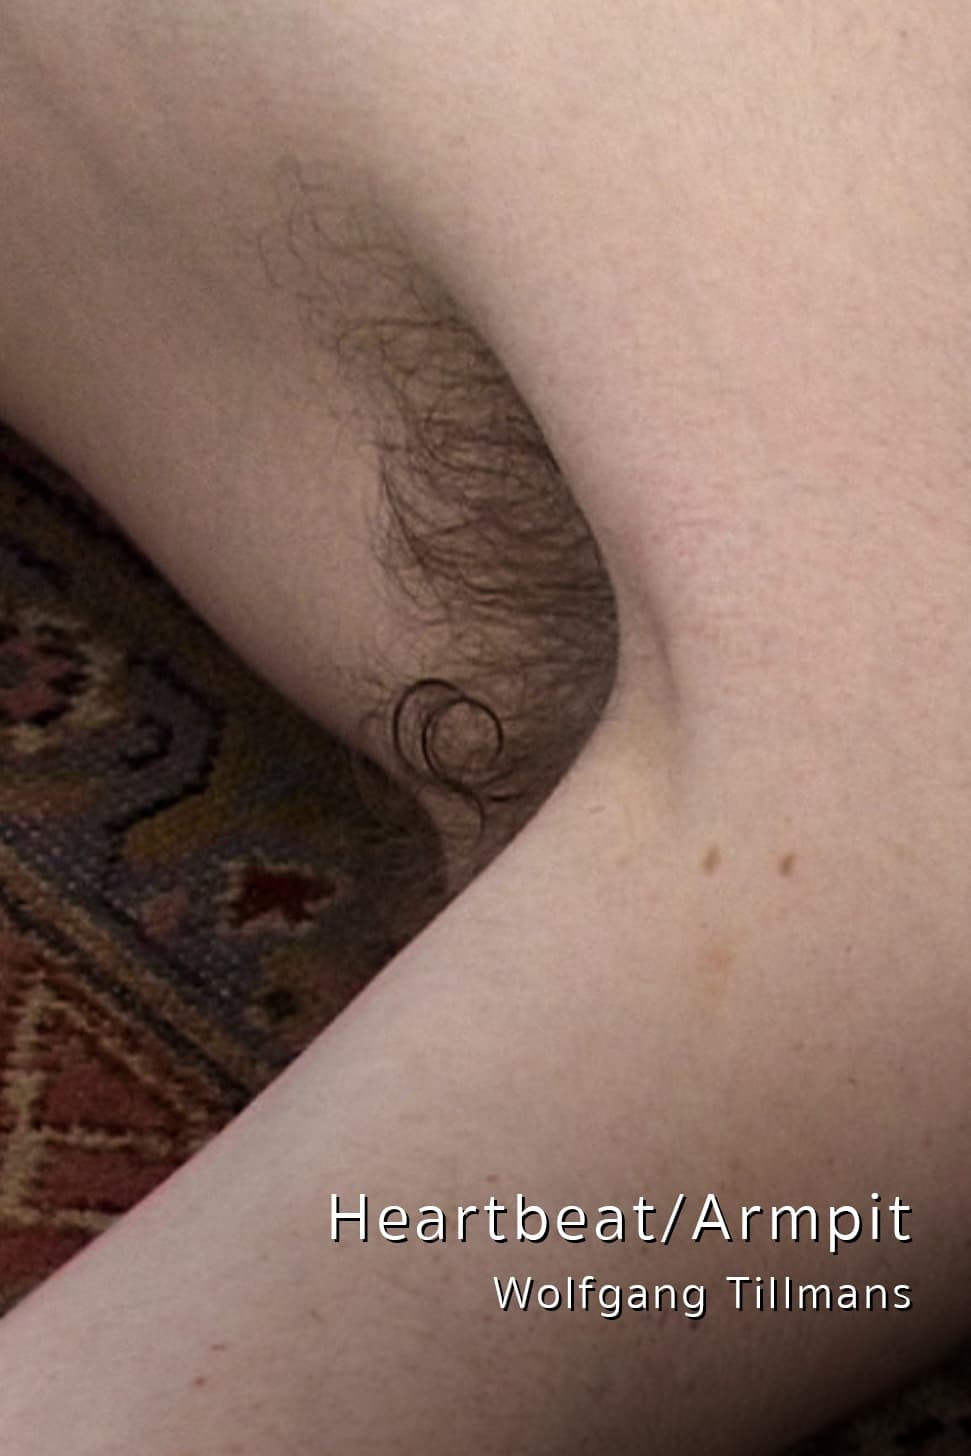 Heartbeat/Armpit